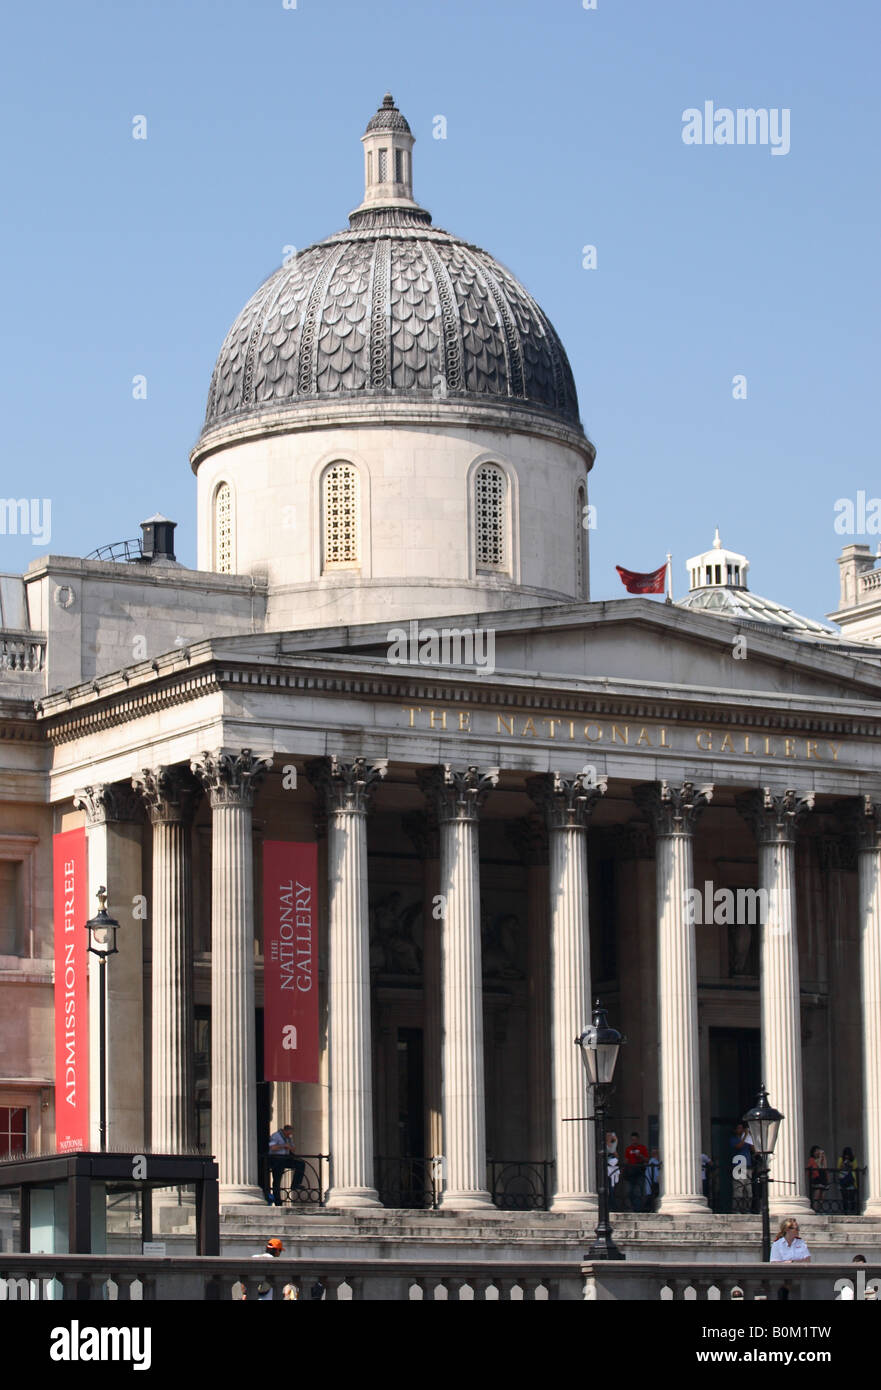 London The National Gallery art museum in Trafalgar Square Stock Photo